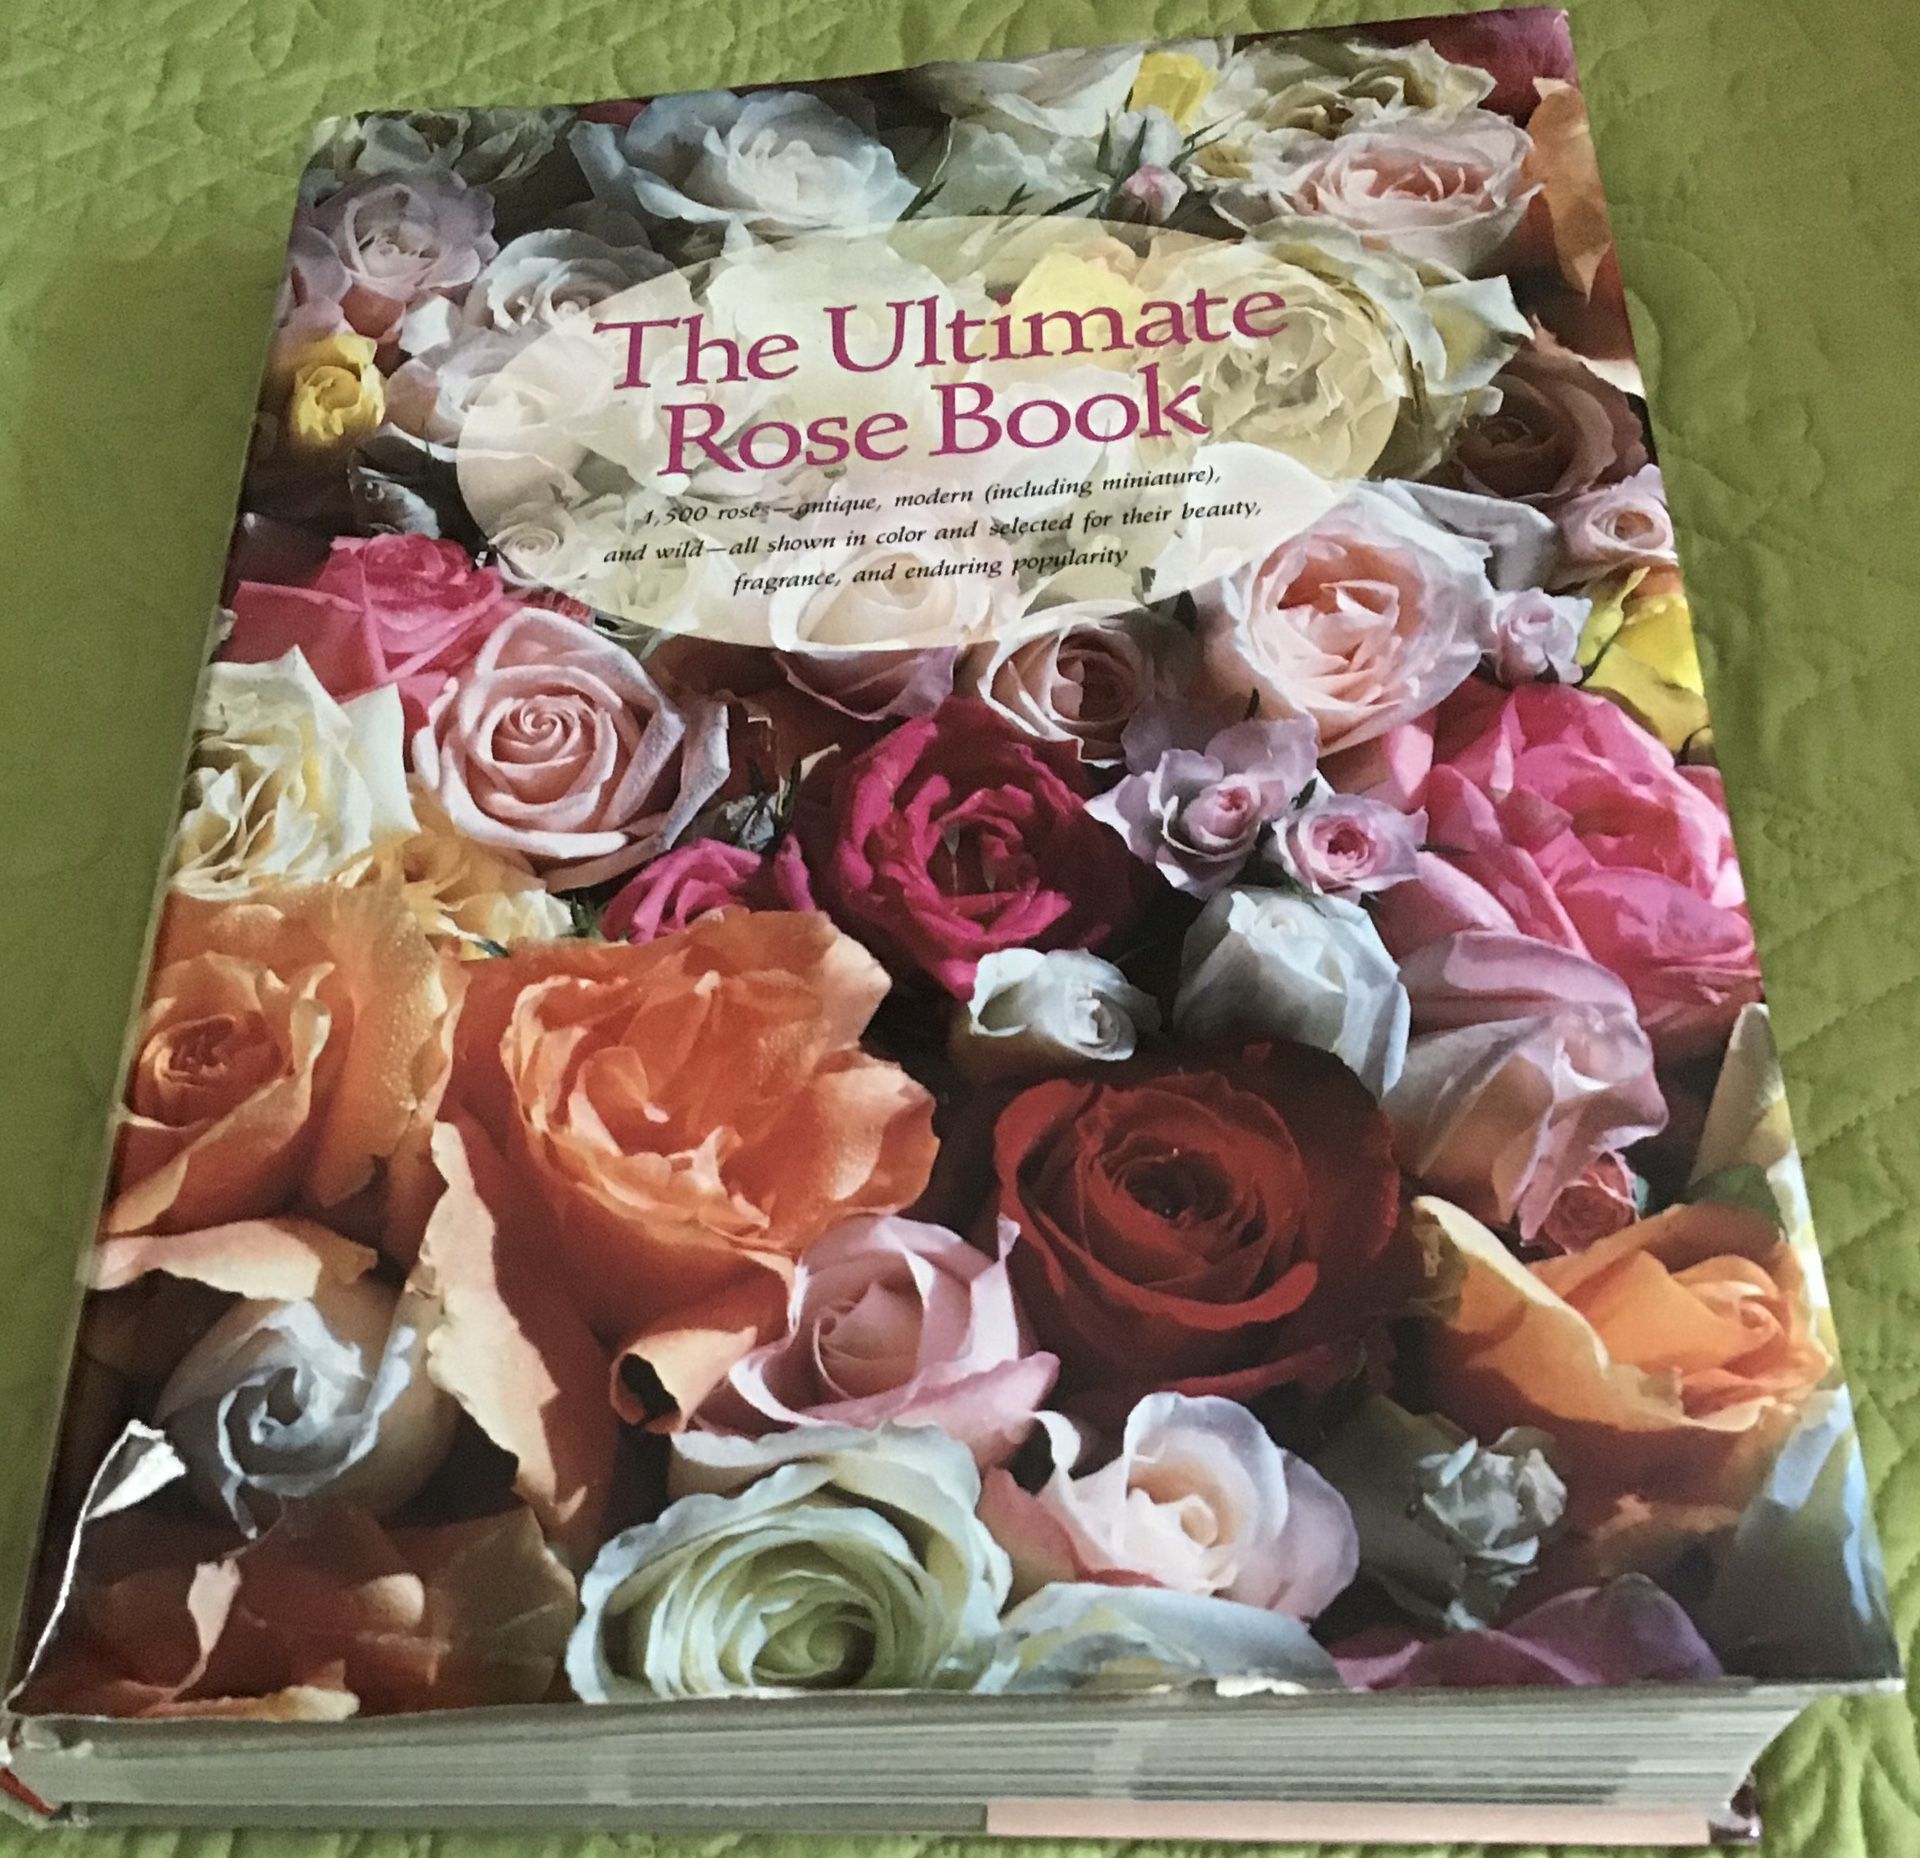 Fabulous “The Ultimate Rose Book”